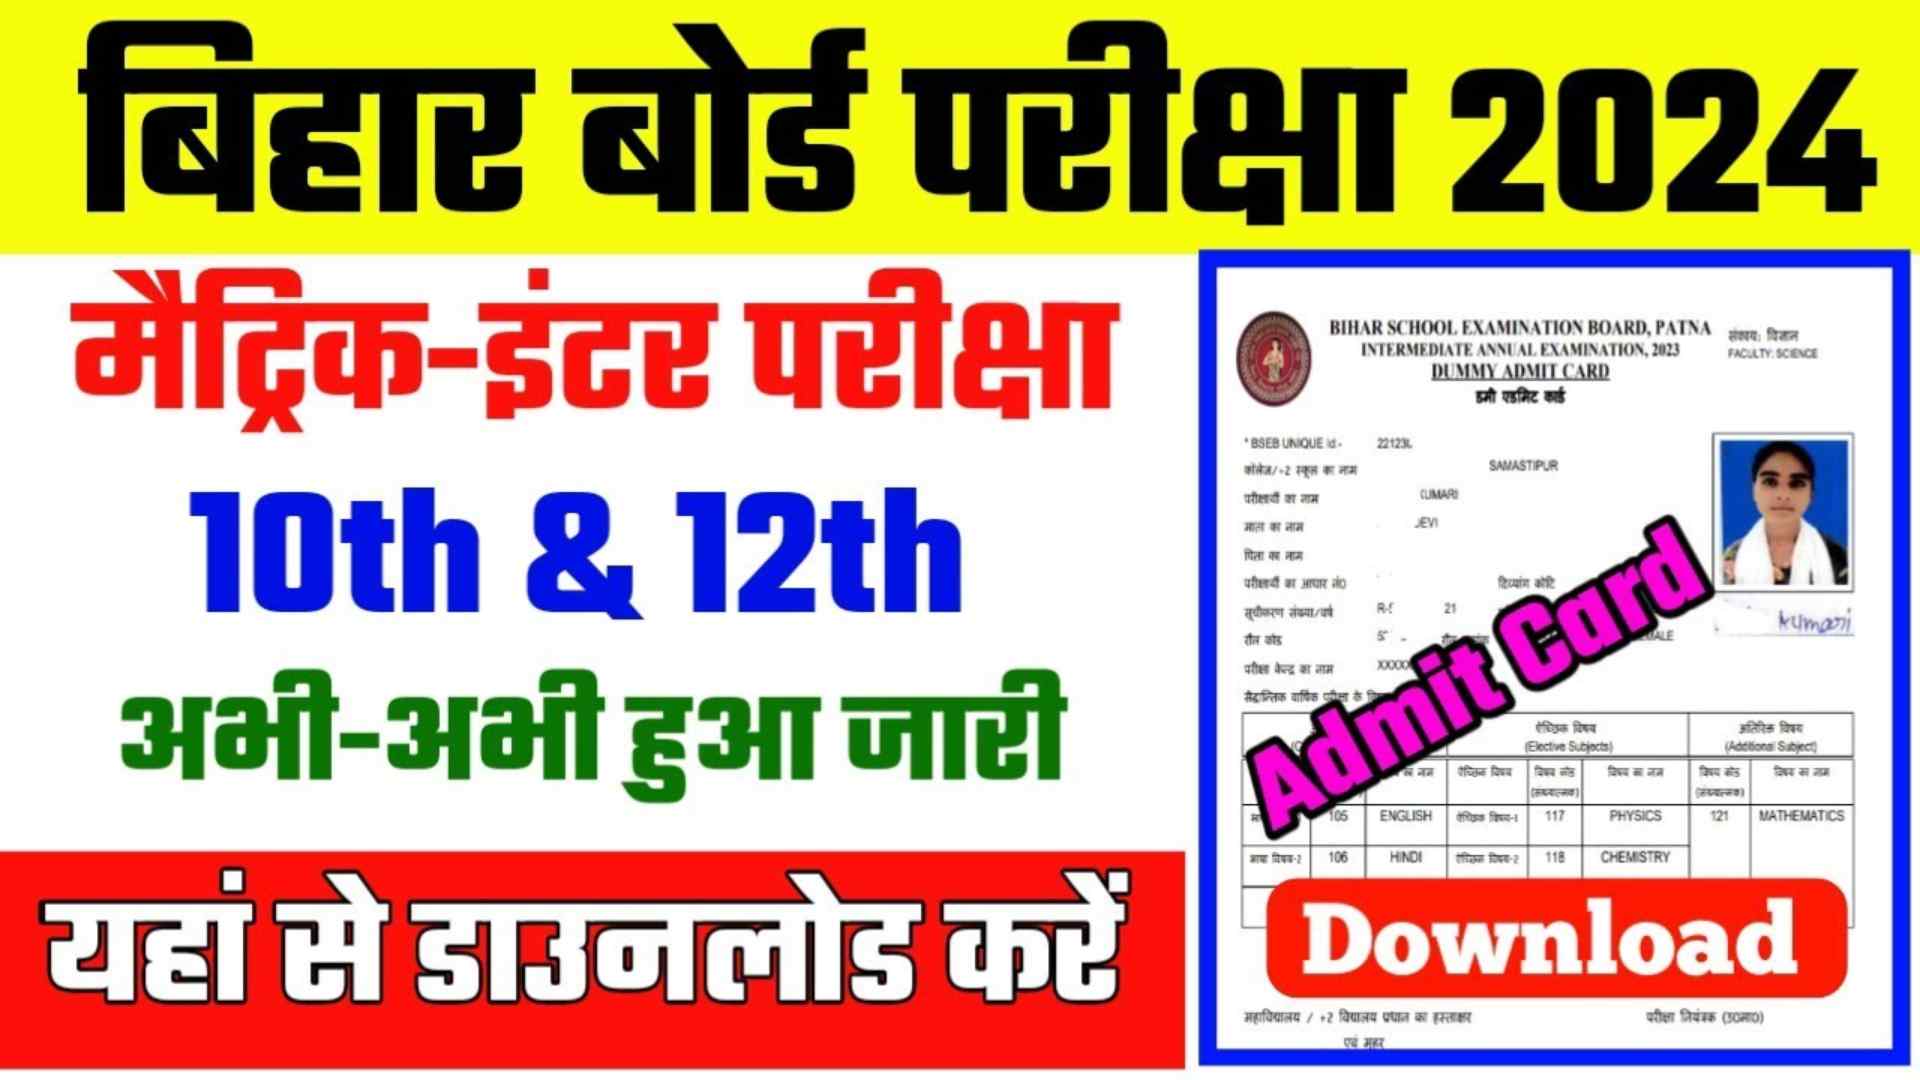 Bihar Board 10th 12th Final Admit Card 2024